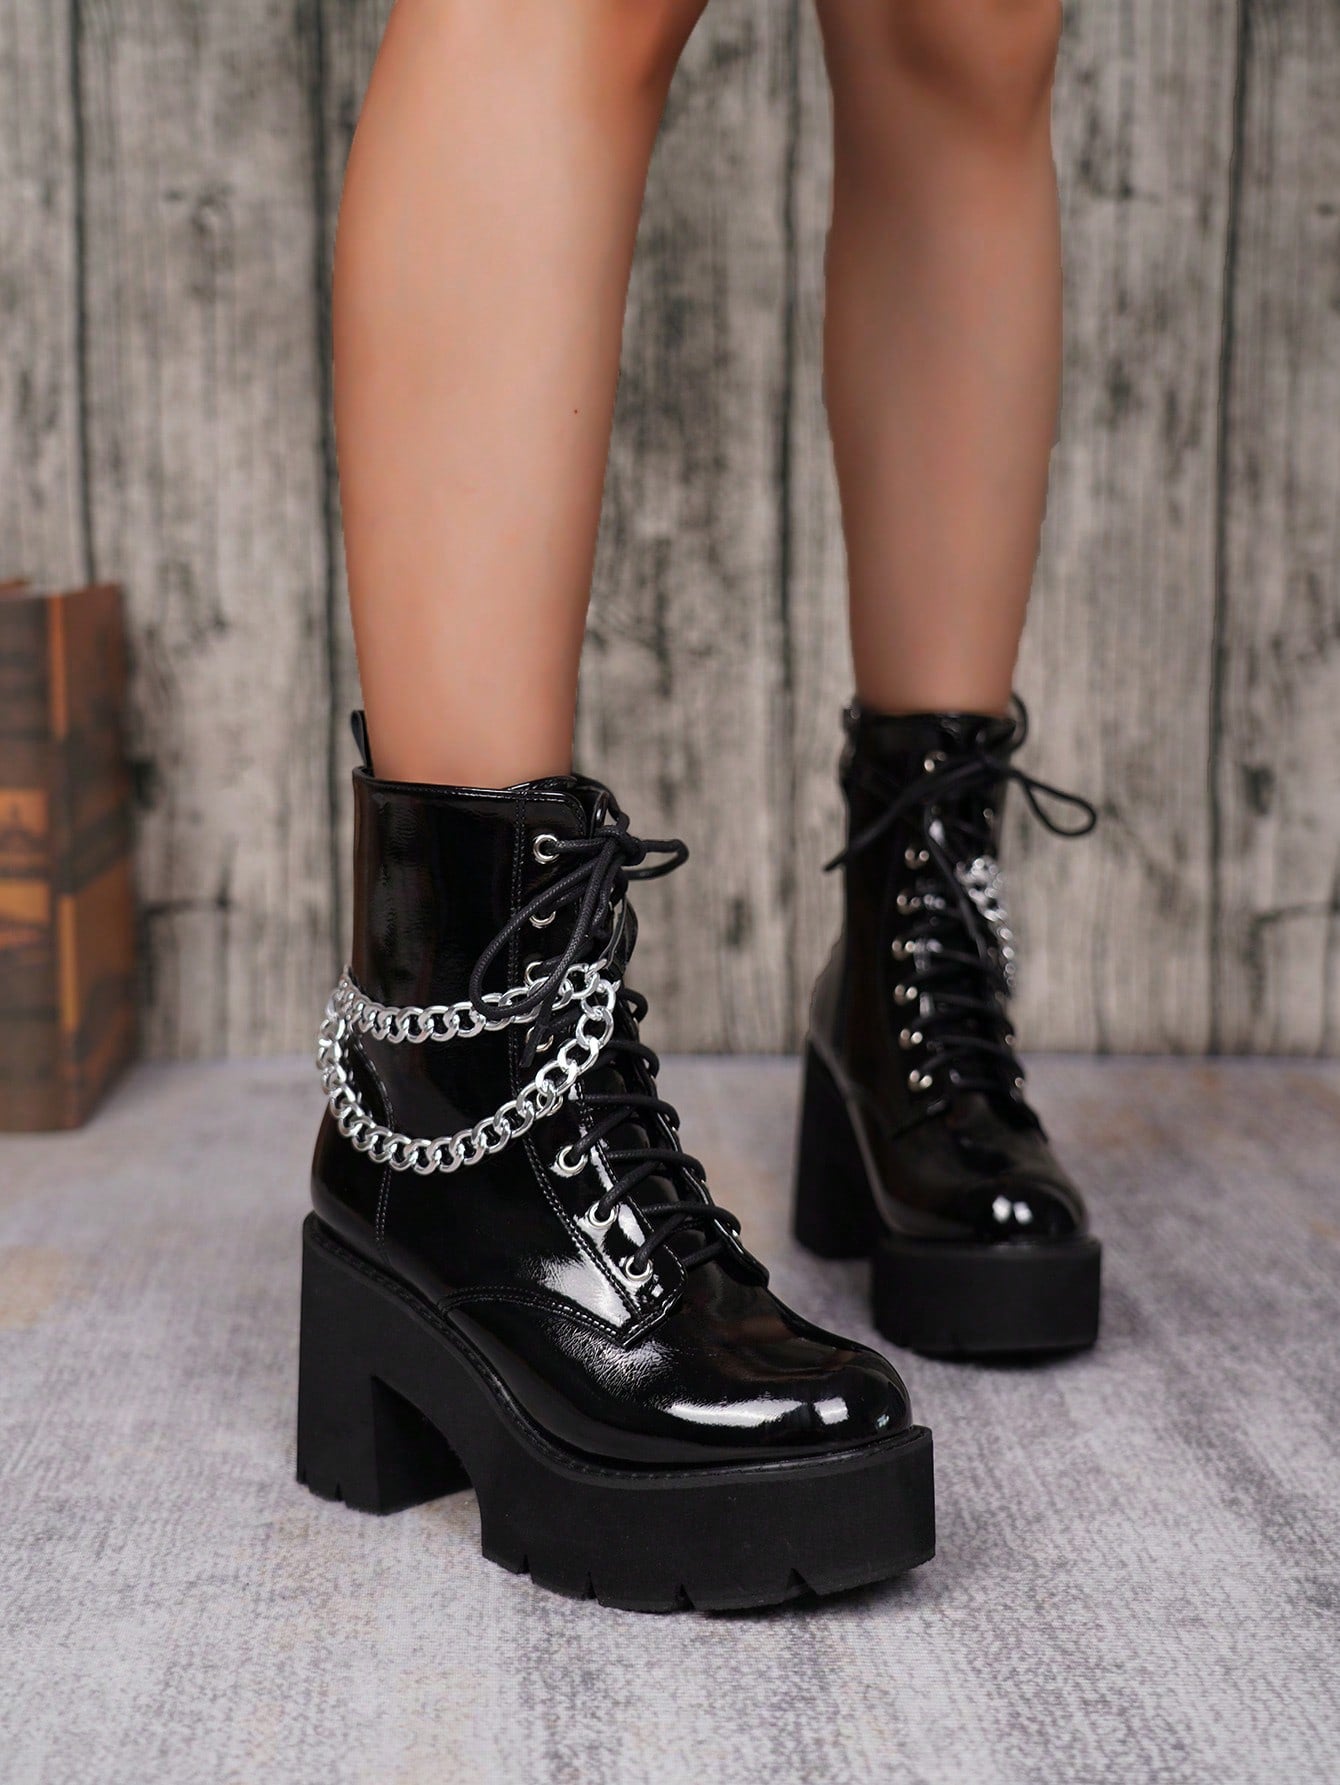 Fashionable Women's Wedge Heel & Platform Boots-Black-7